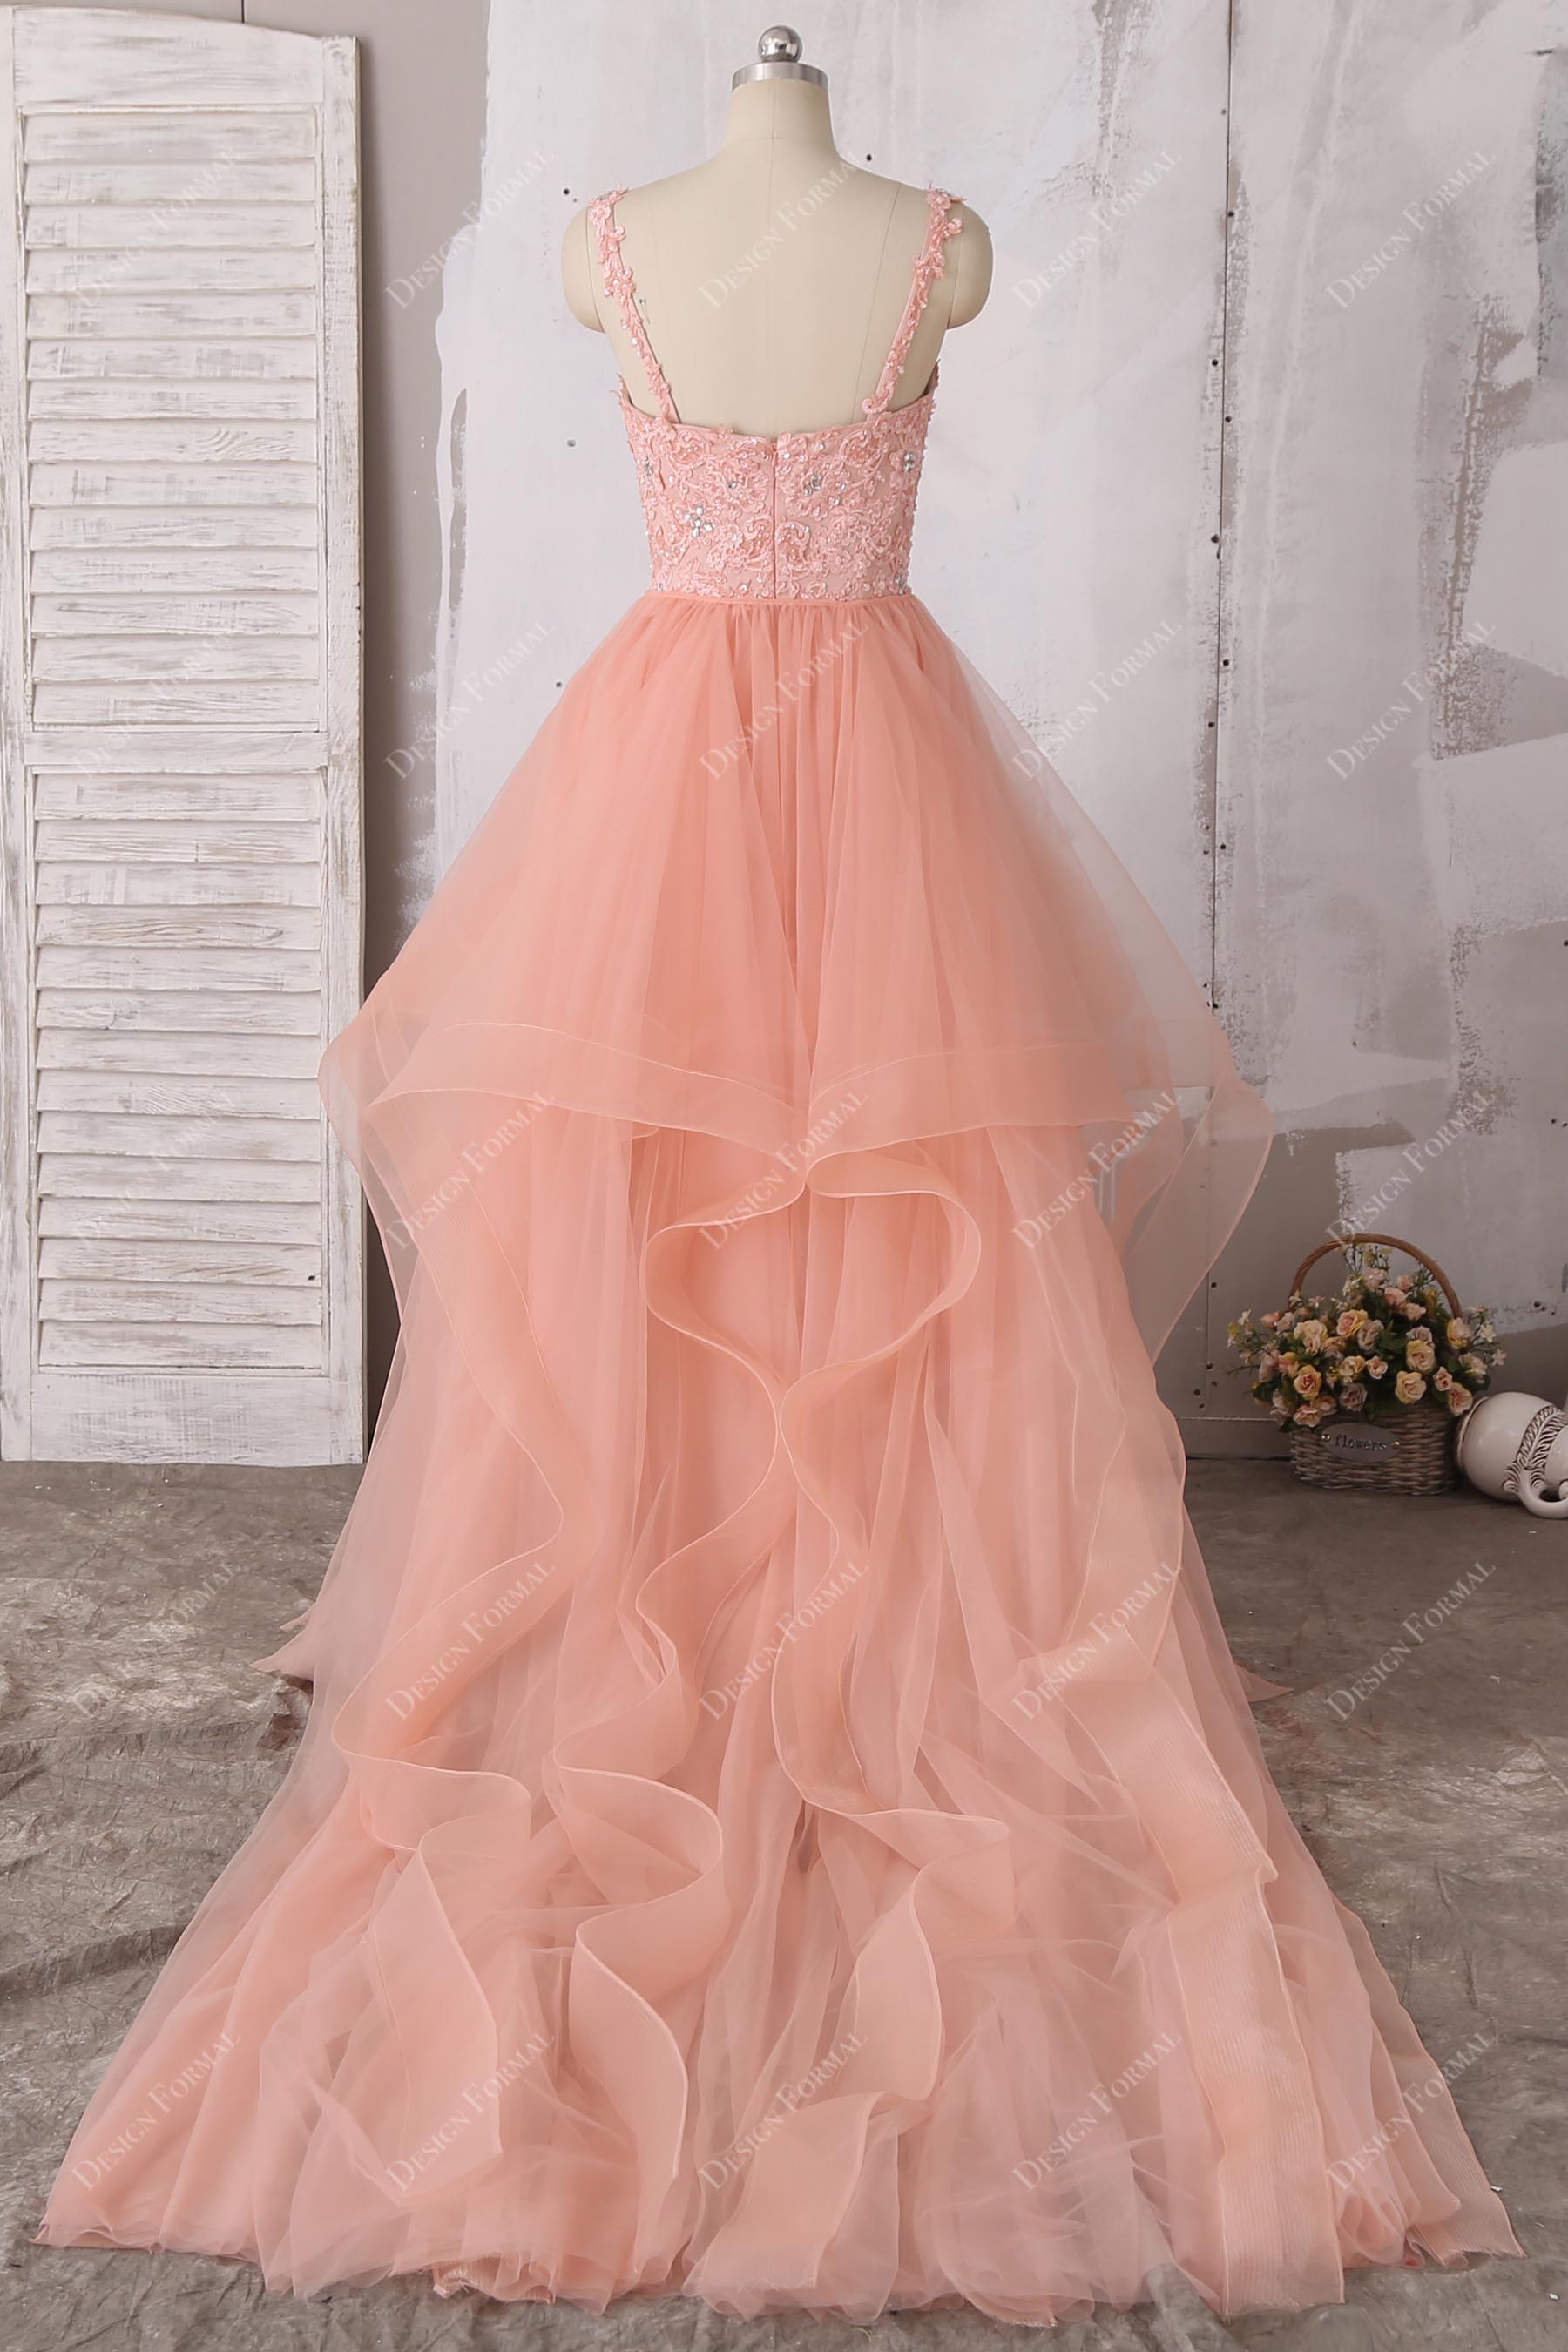 Yellow Mesh Tulle Corset Prom Dress Ballgown Strapless - $131.9832